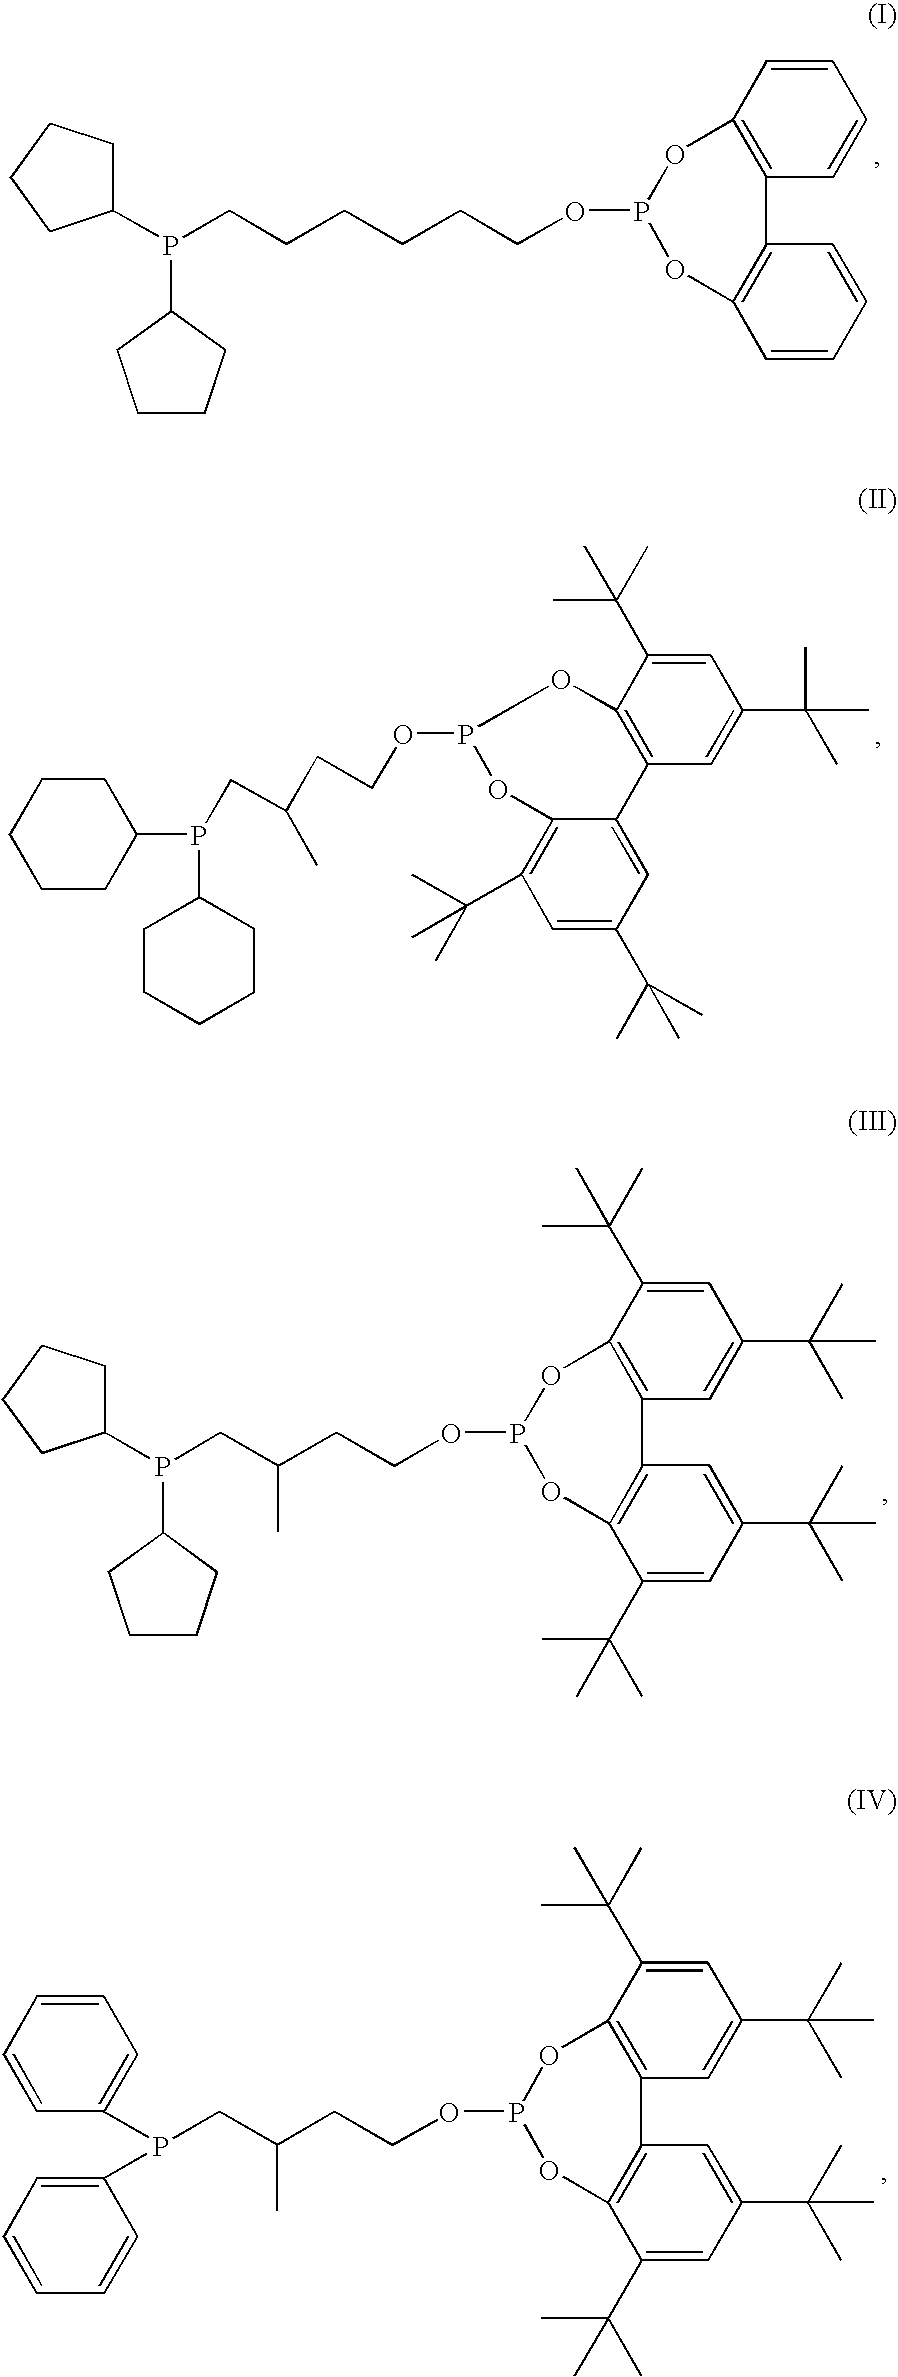 Hydroformylation catalysts